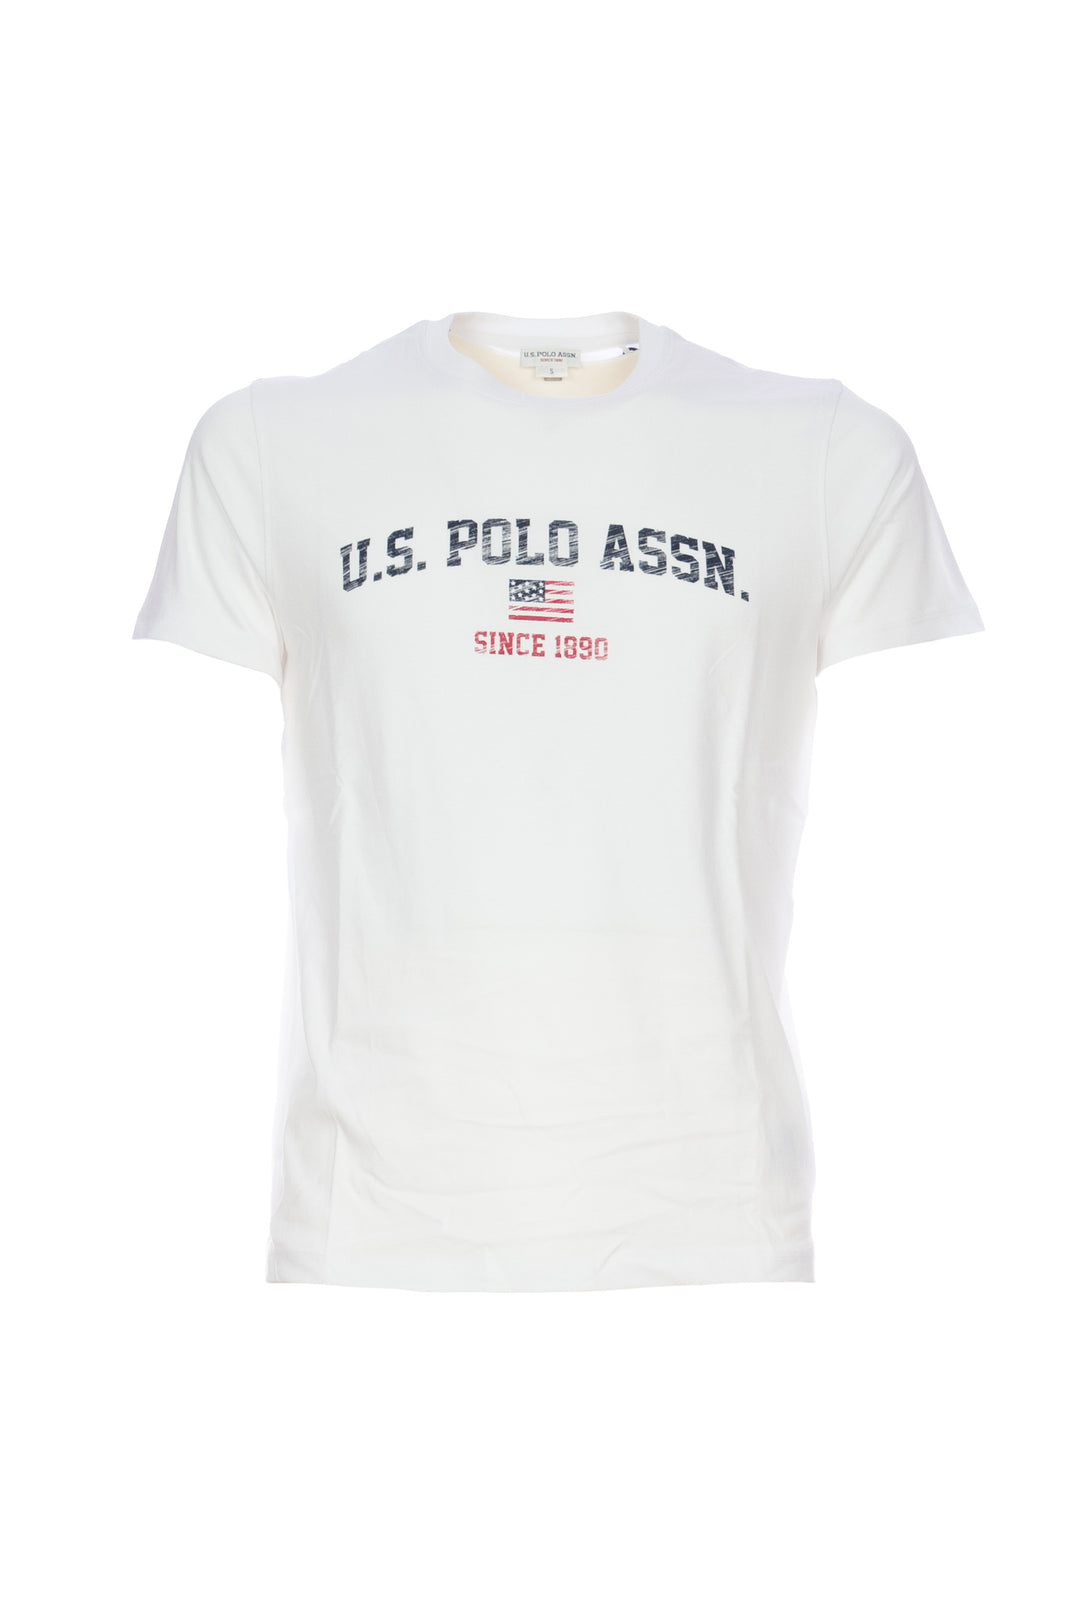 U.S. POLO ASSN. T-shirt bianca in cotone con stampa U.S. Polo Assn. - Mancinelli 1954